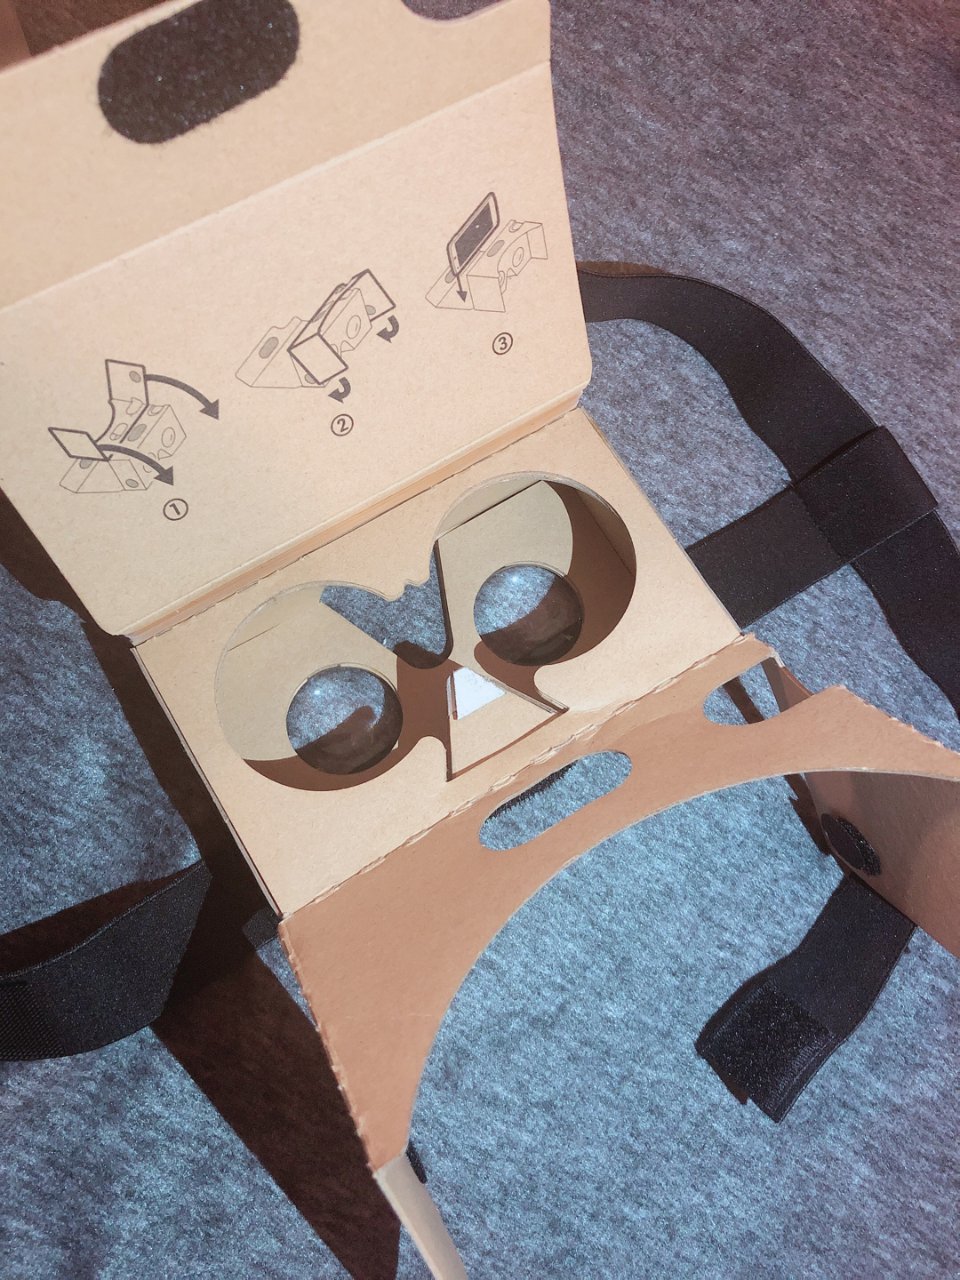 Google cardboard glasses